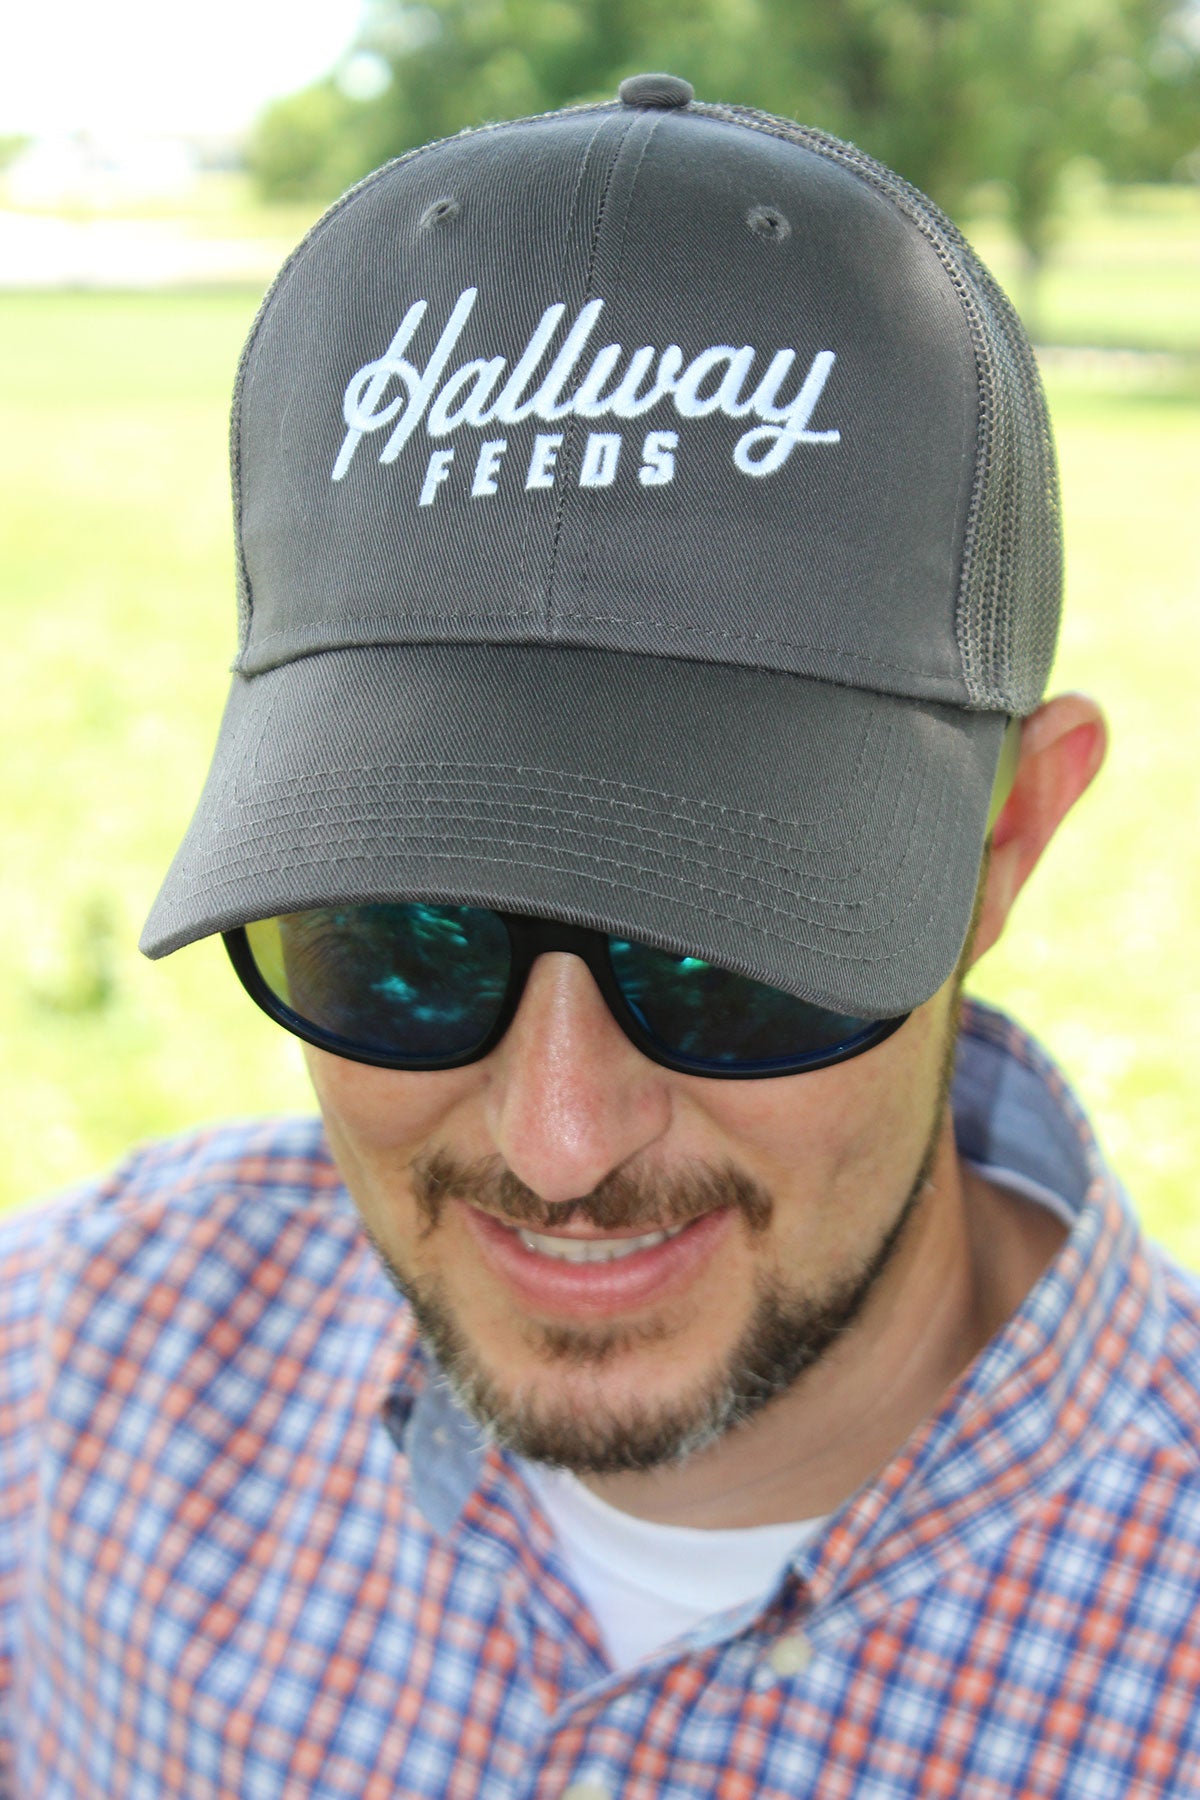 Low Profile Hallway Feeds Trucker Hat